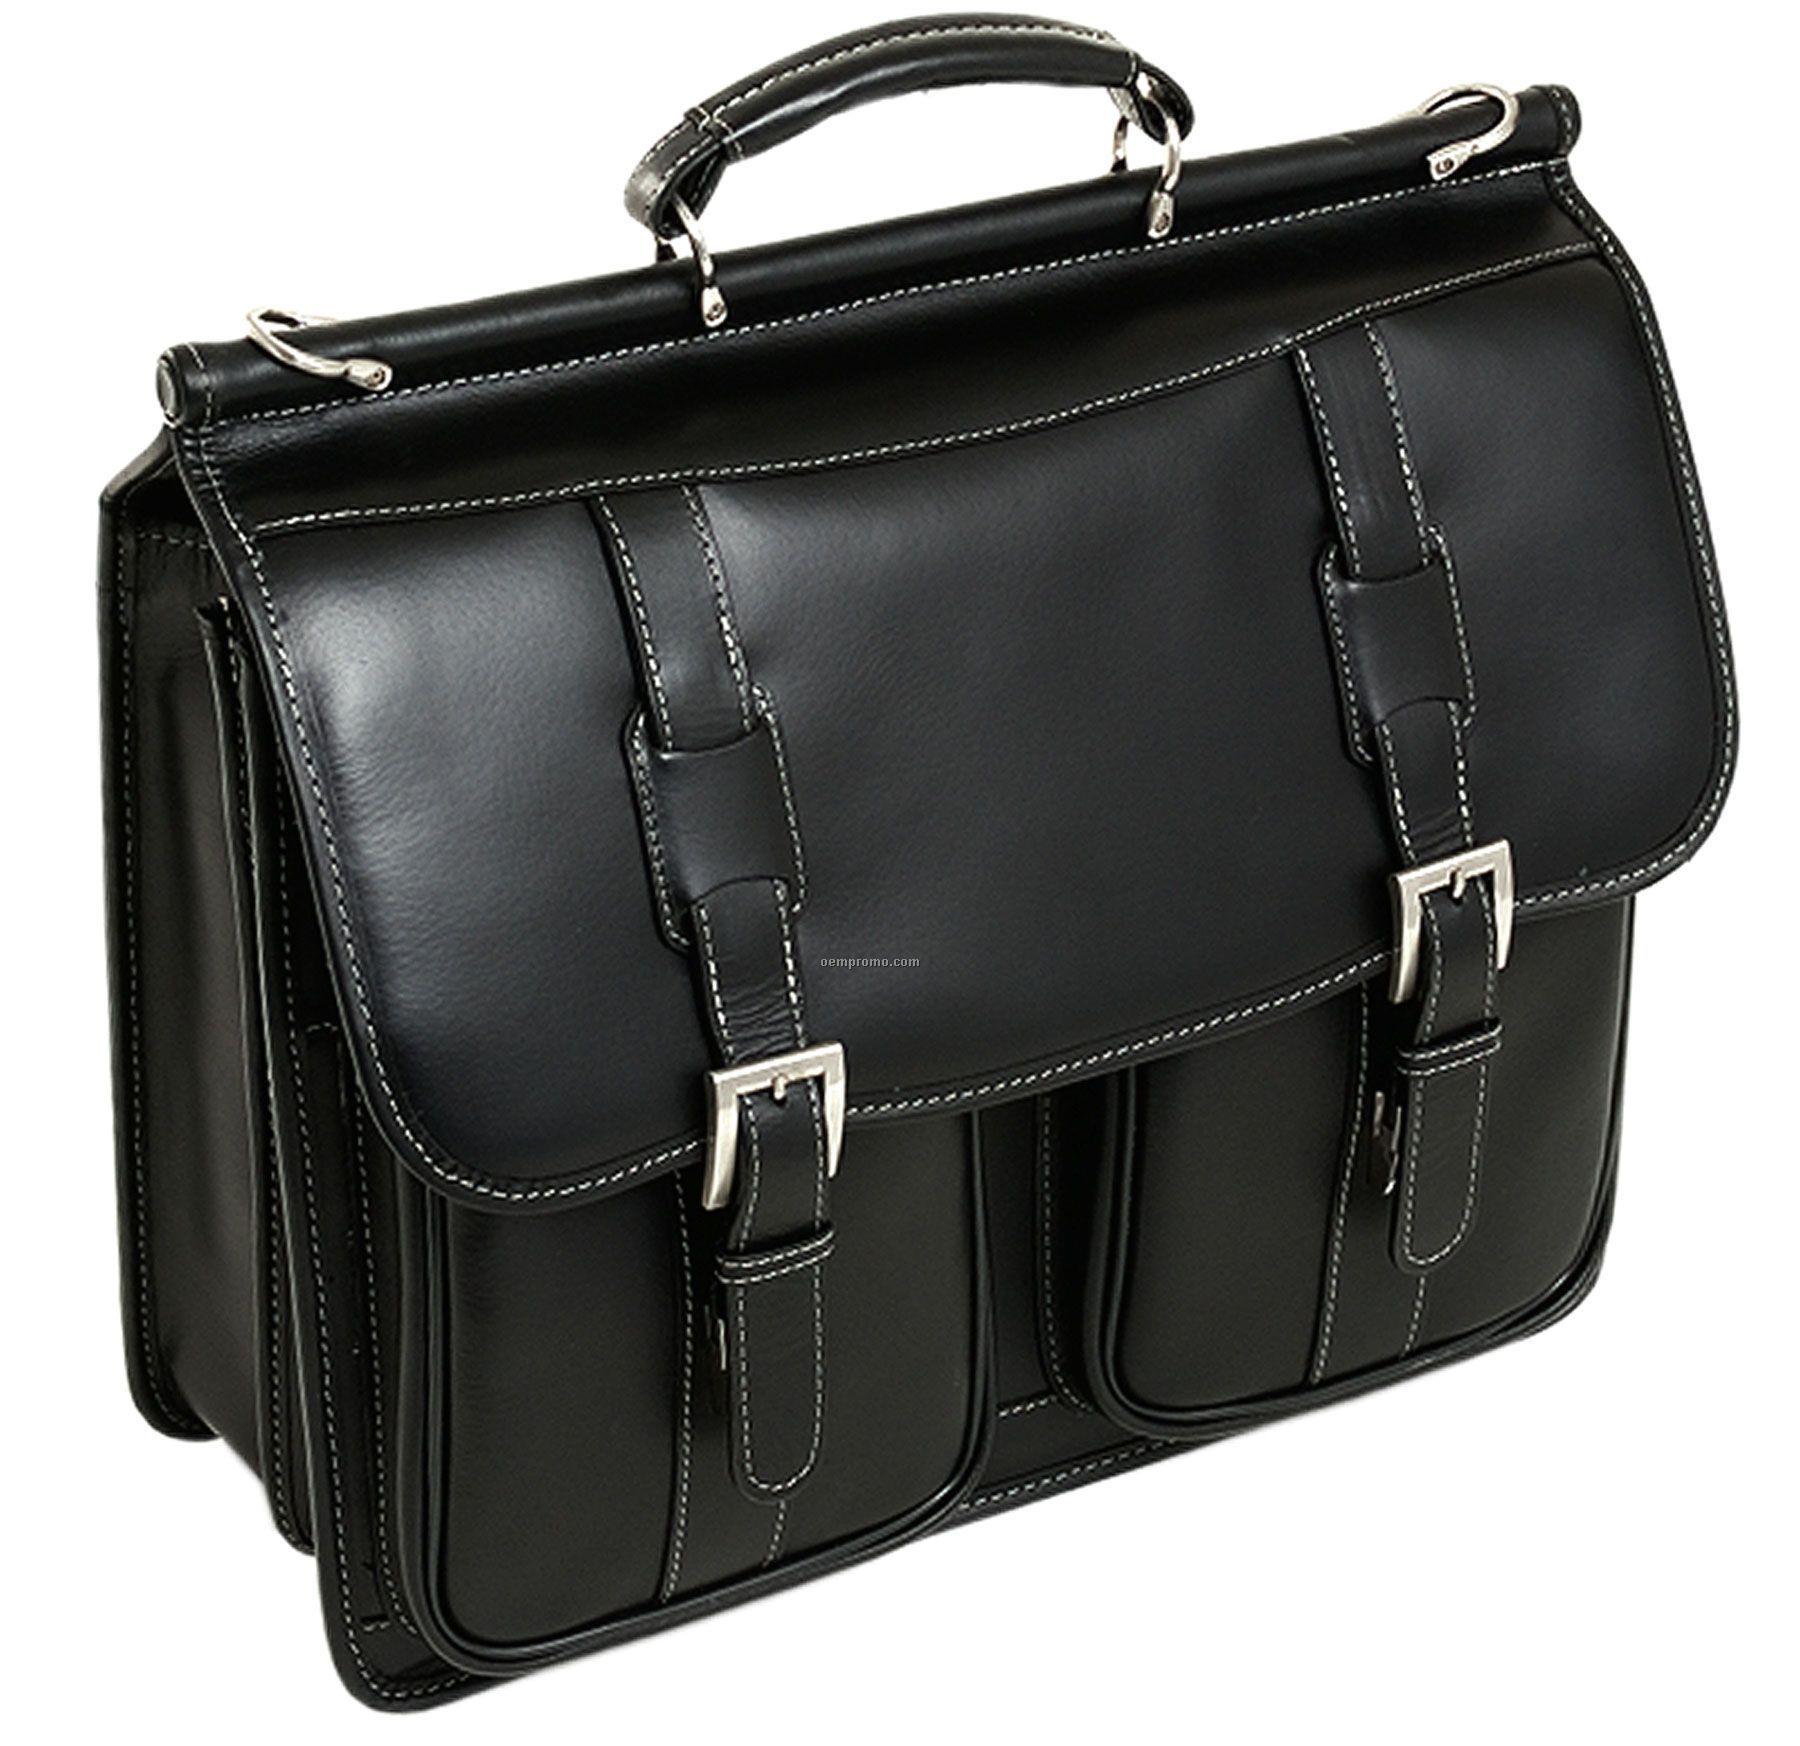 Signorini Leather Double Compartment Laptop Case - Black